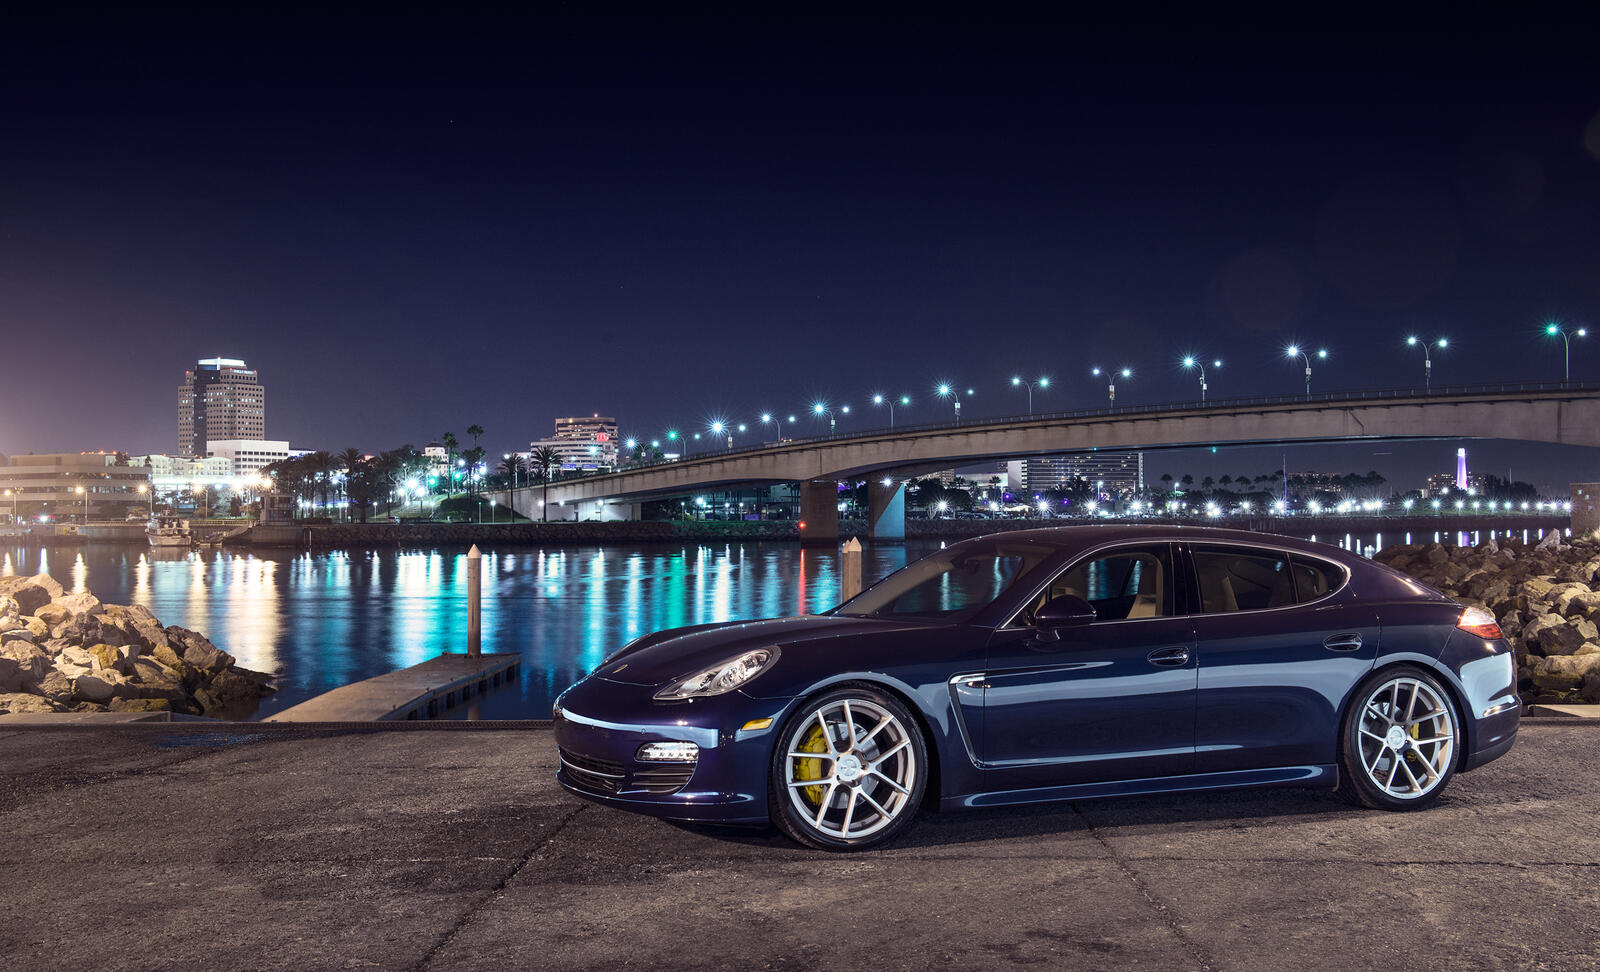 Бесплатное фото Синий Porsche Panamera на фоне ночного города